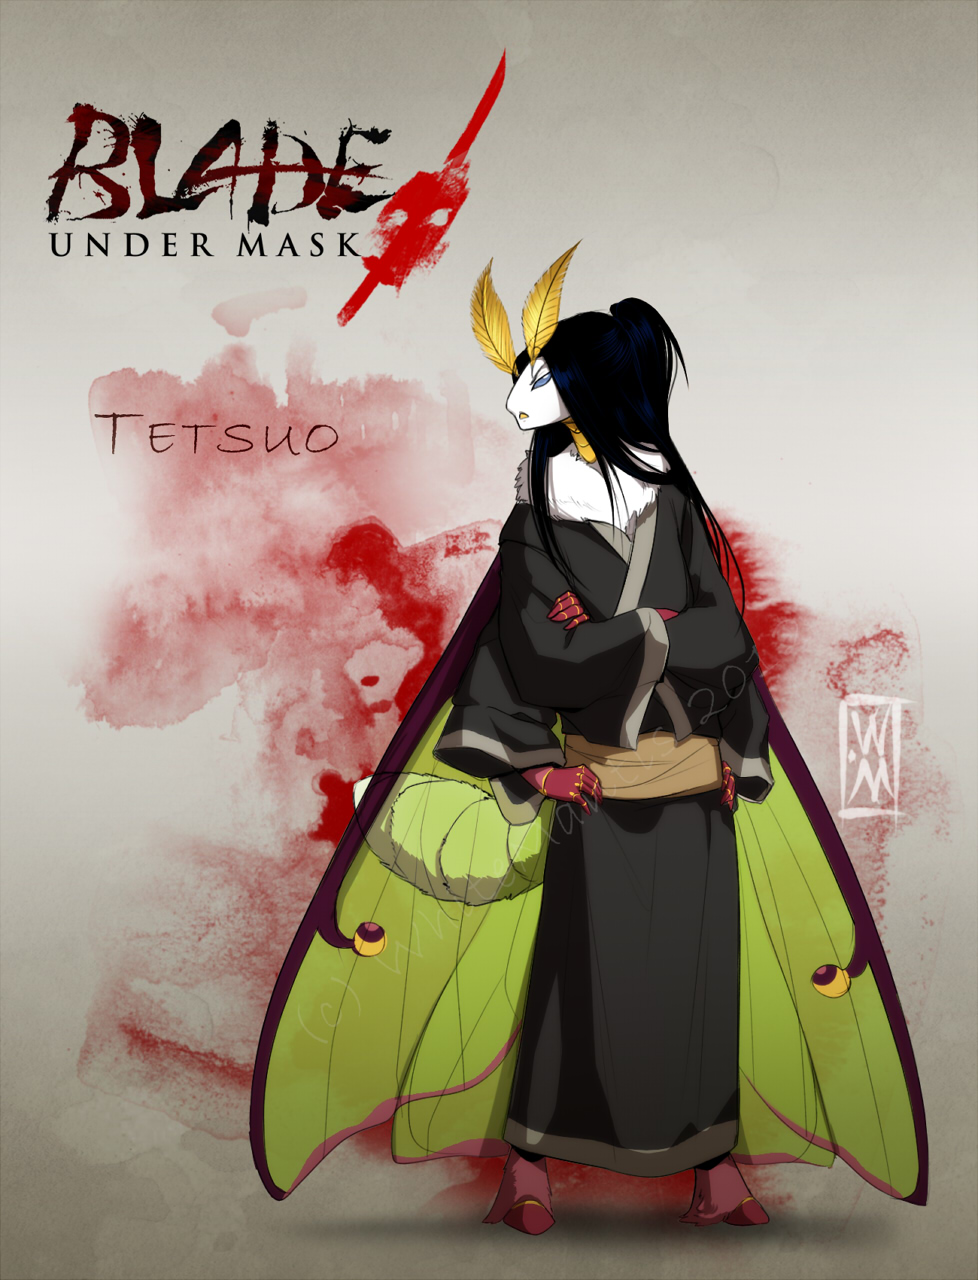 Blade Under Mask: Tetsuo